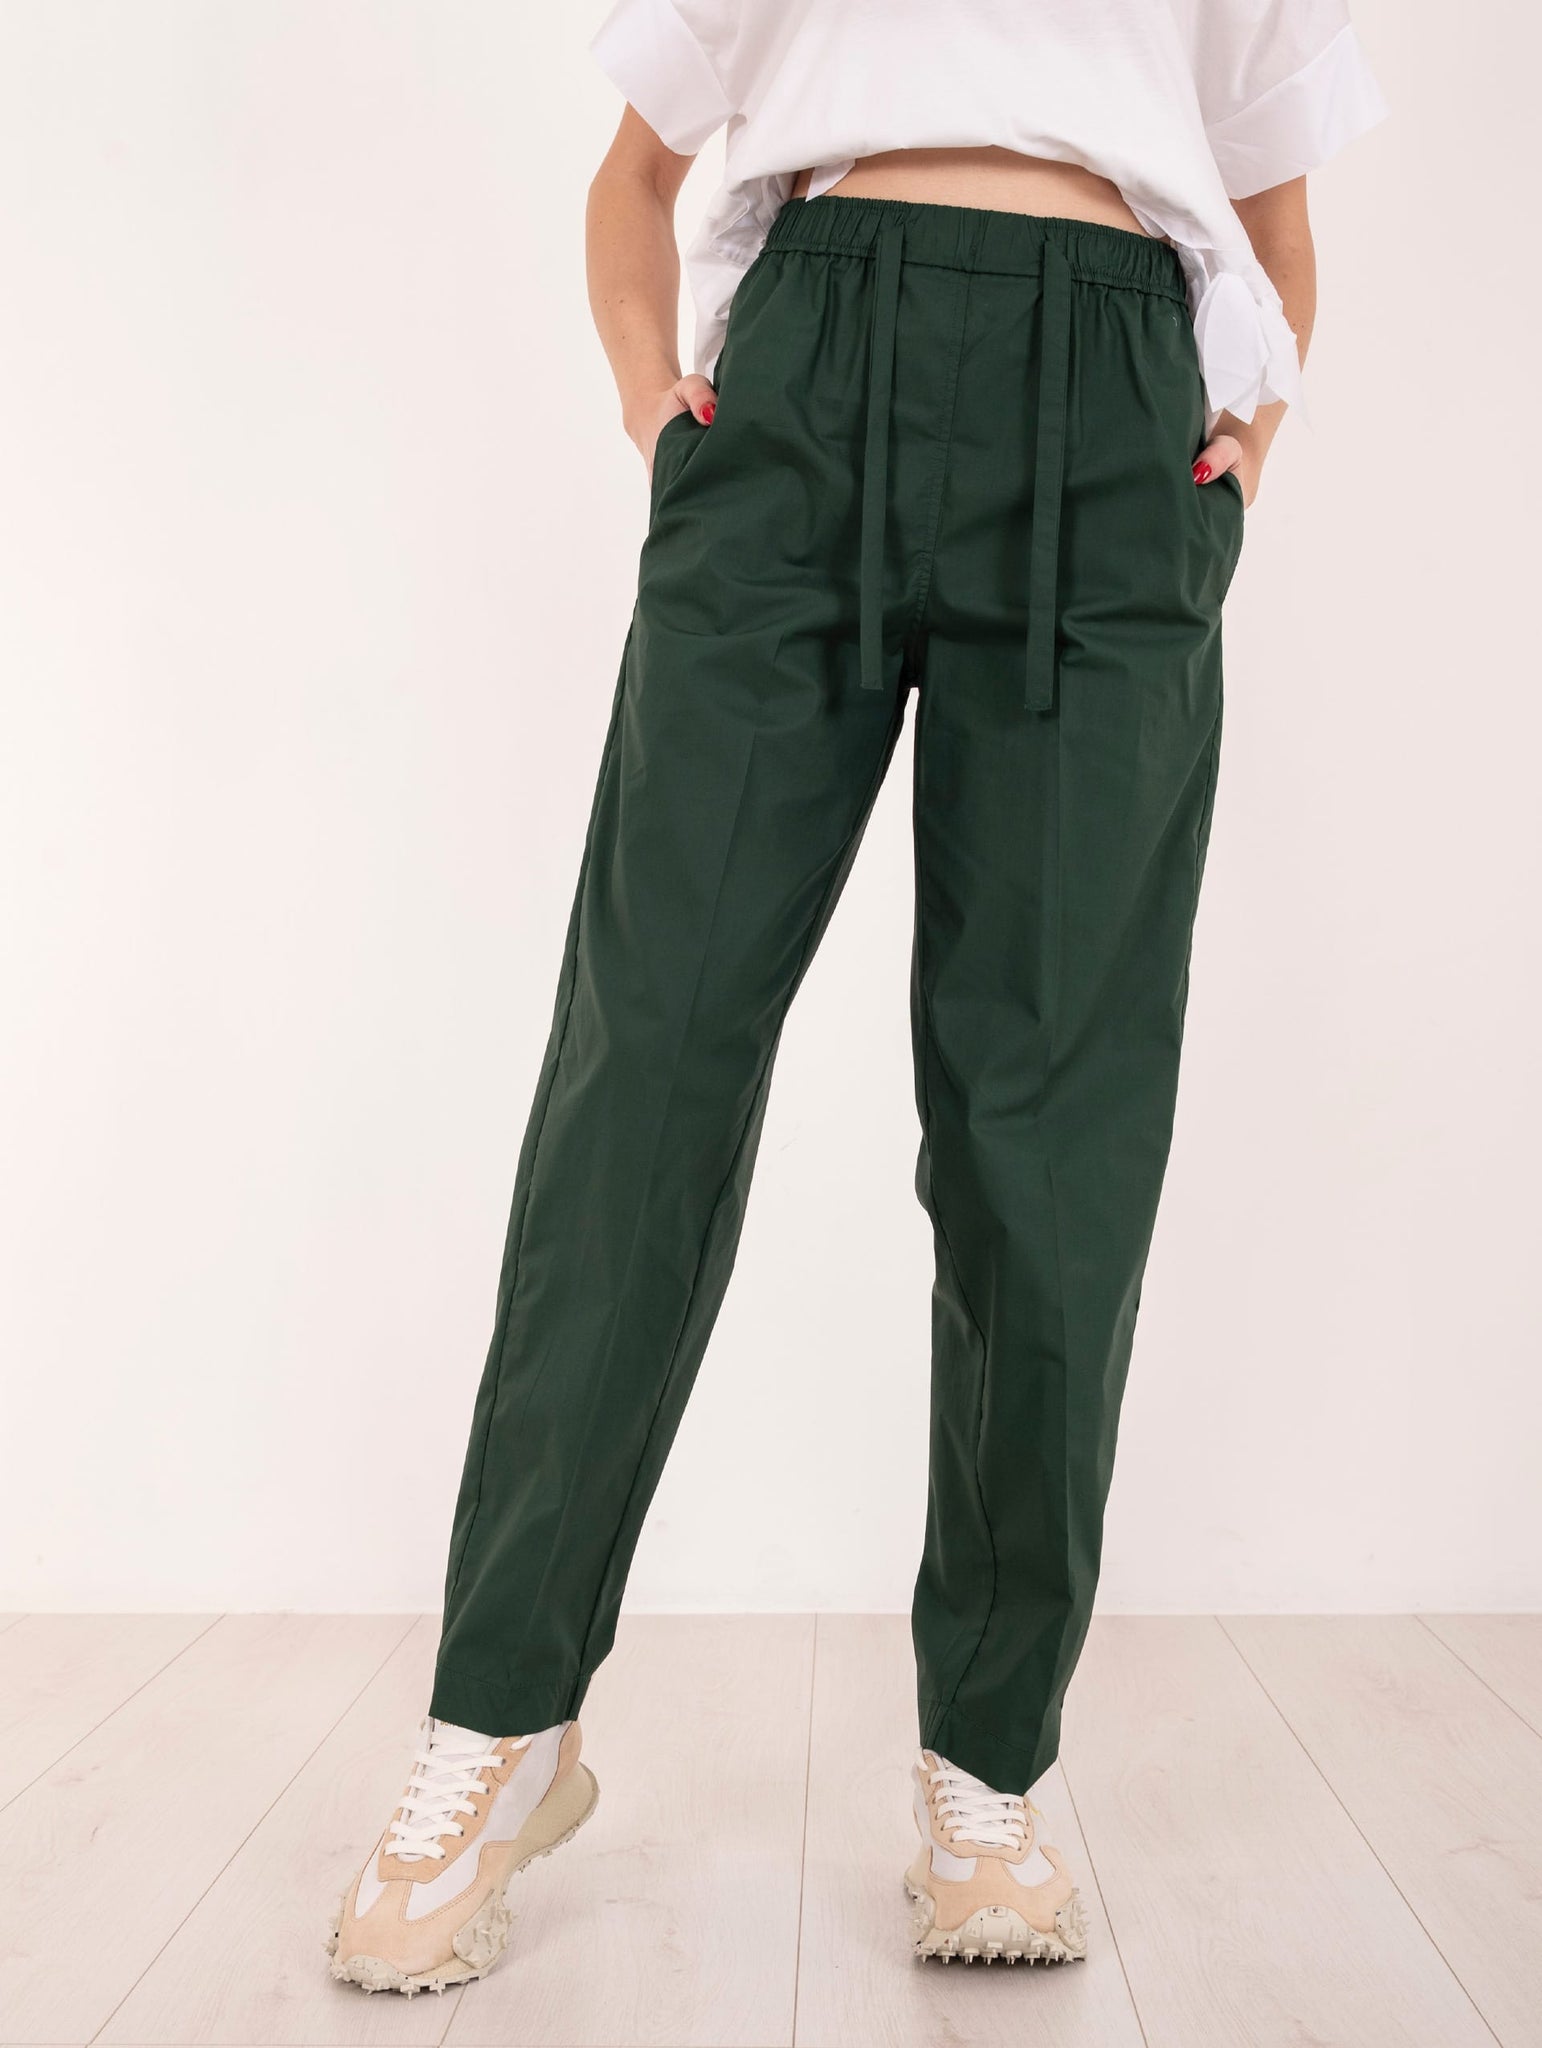 Pantalone Meimeij in Cotone Verde